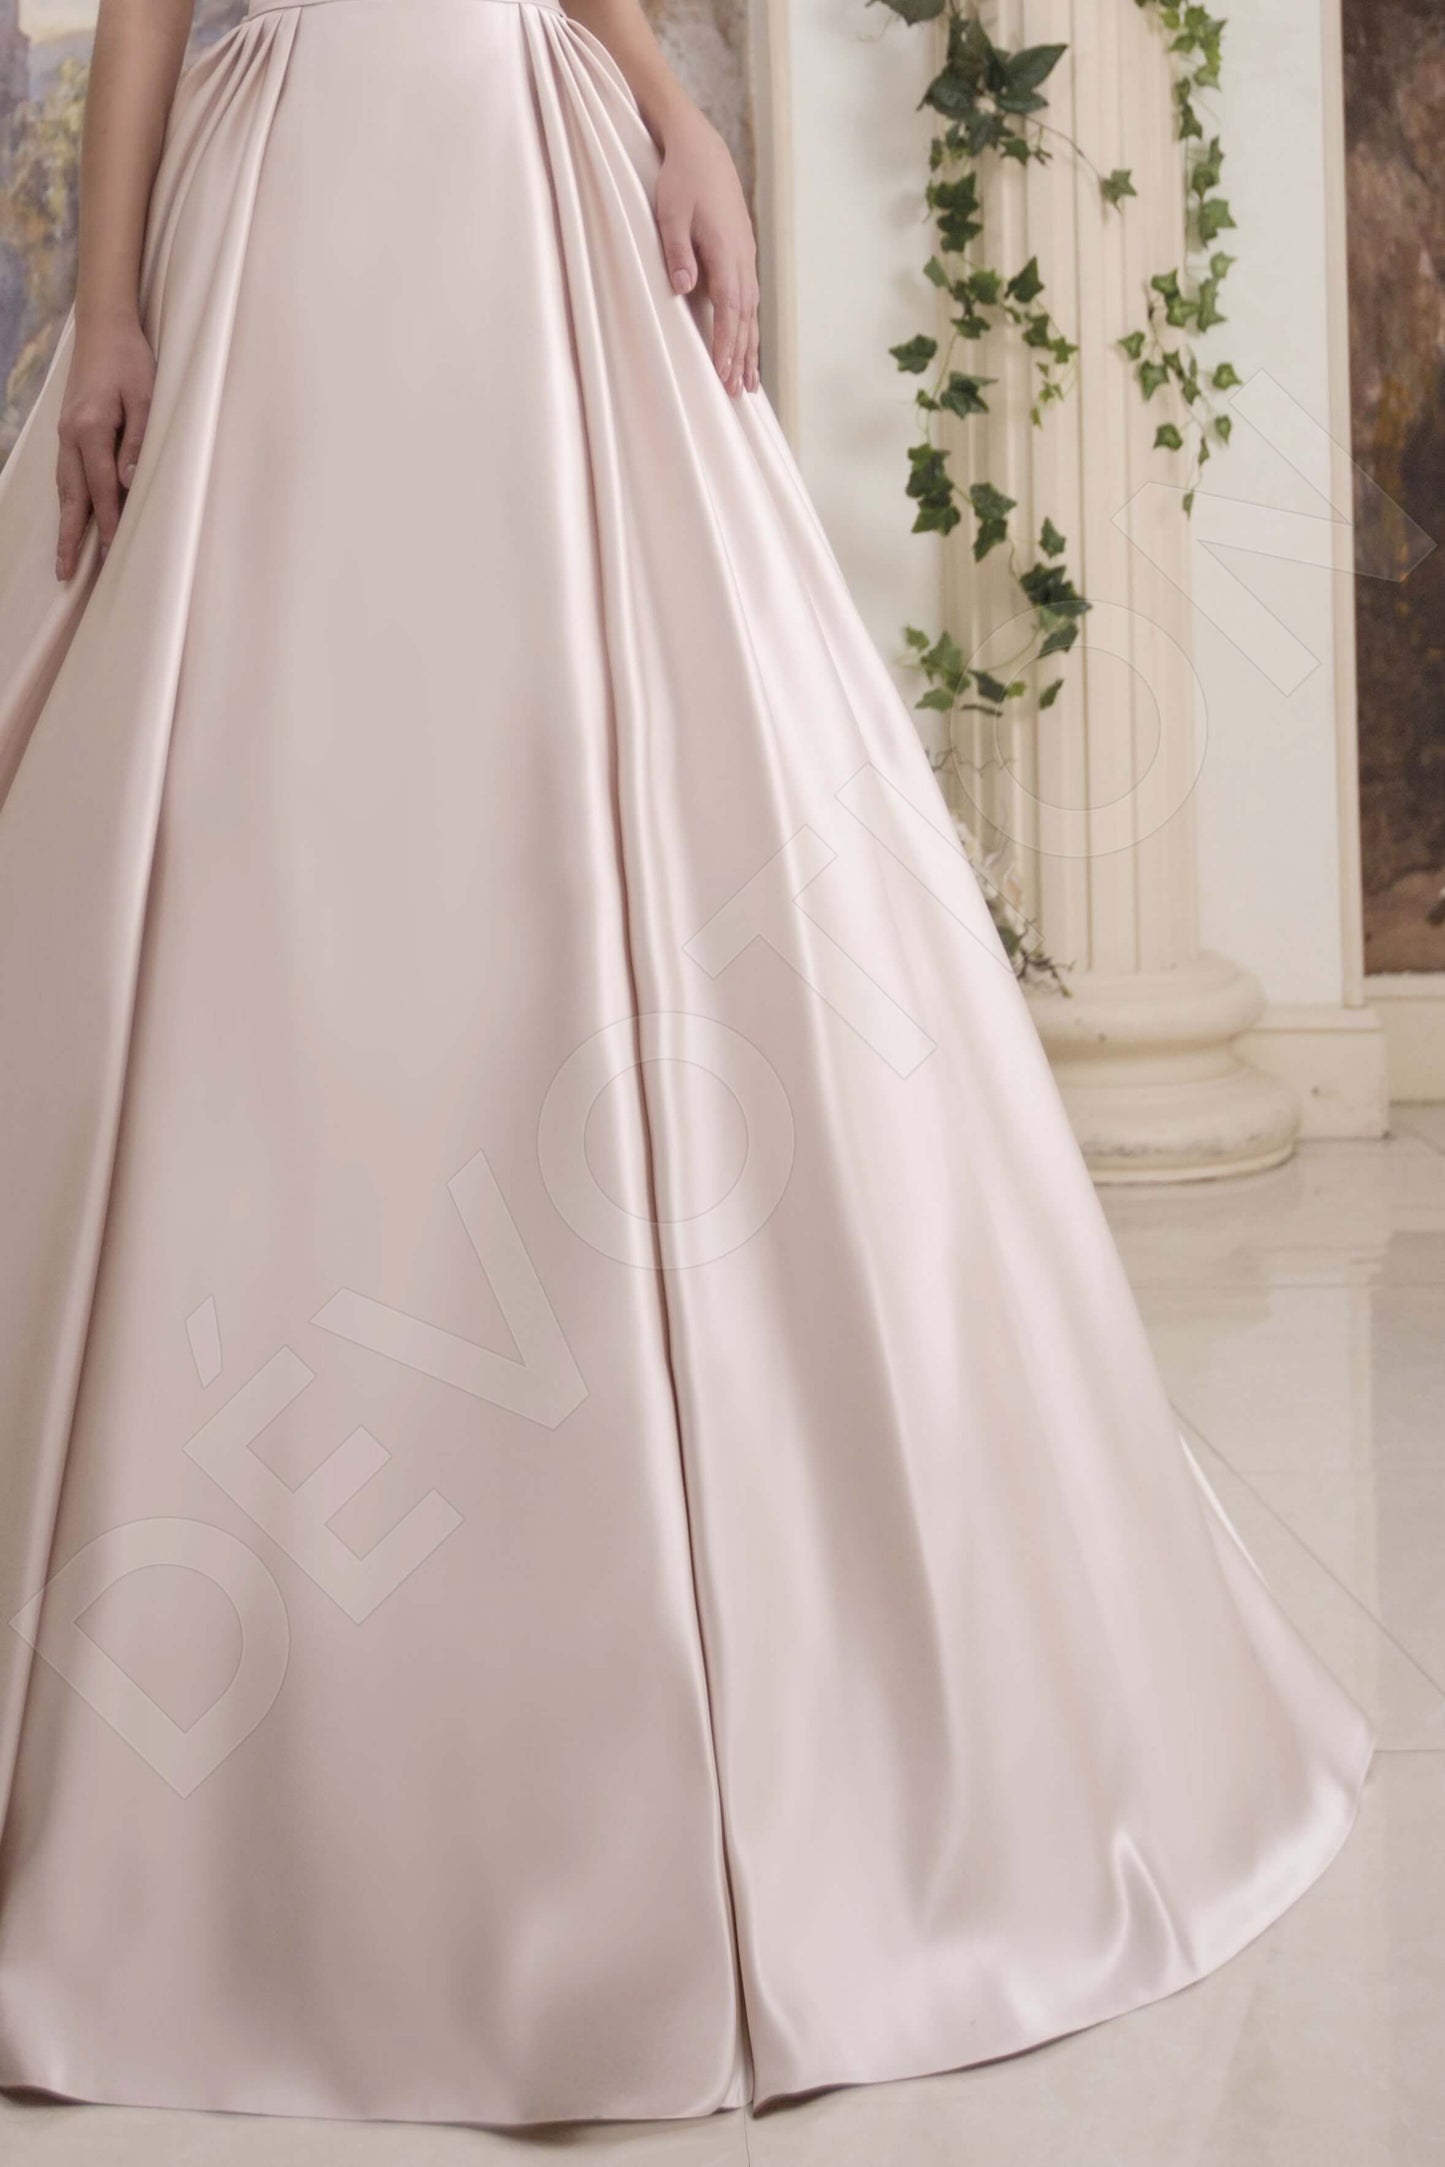 Vladania Open back A-line Straps Wedding Dress 5